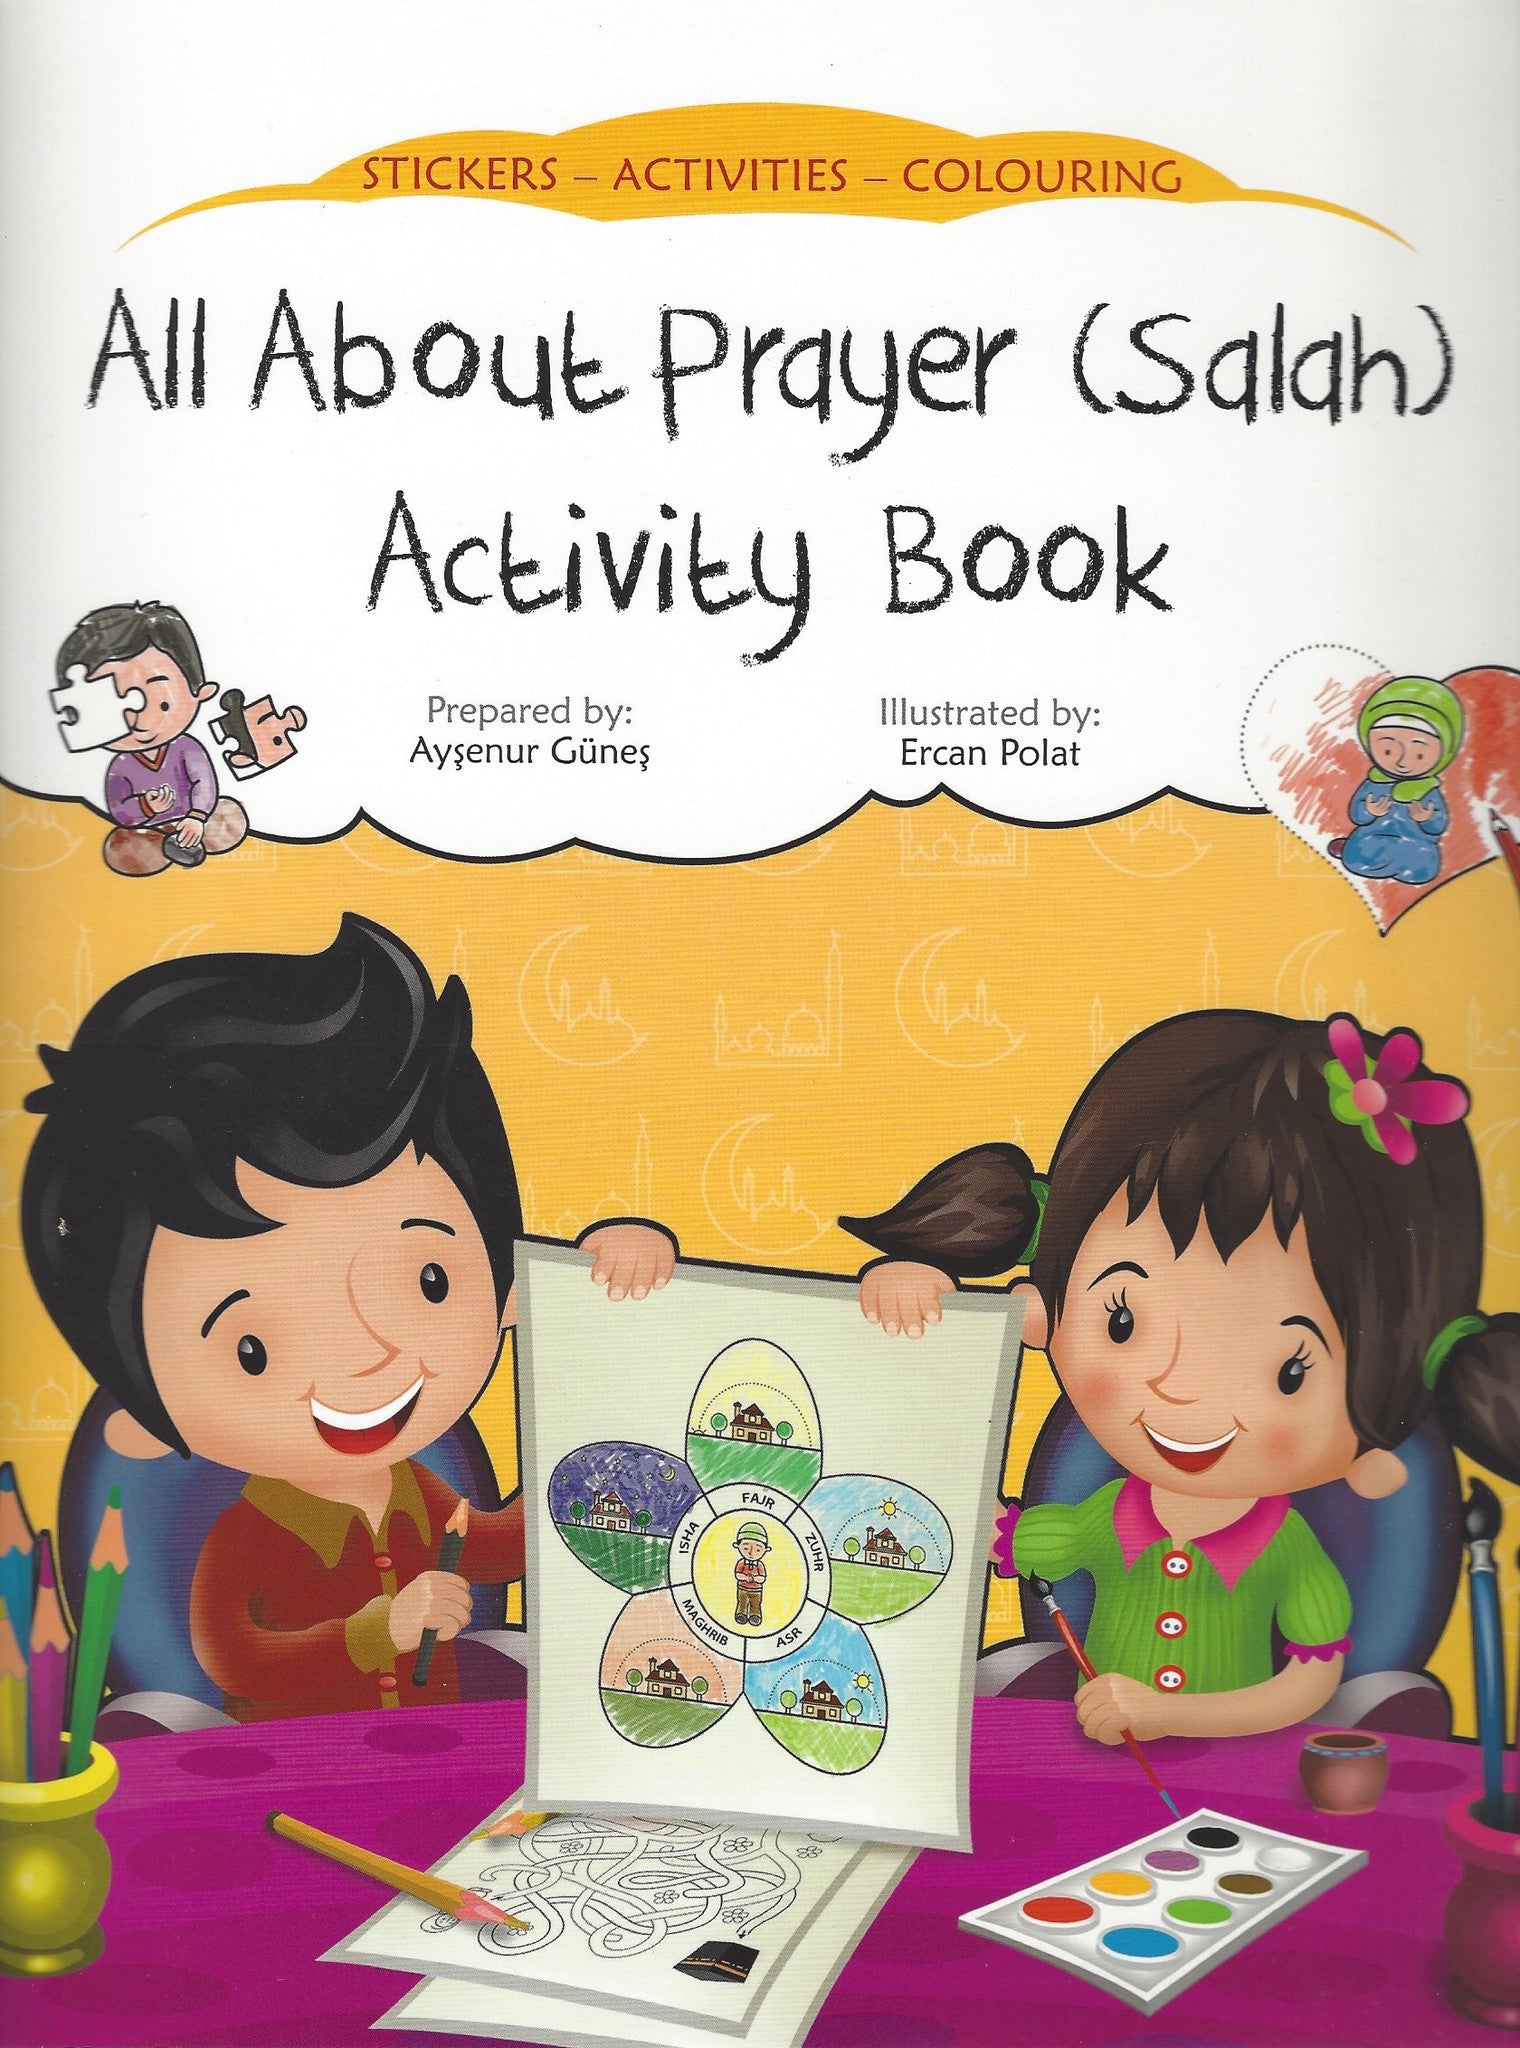 All About Prayer (Salah) Activity Book , Activity Book - Daybreak Press Global Bookshop, Daybreak Press Global Bookshop
